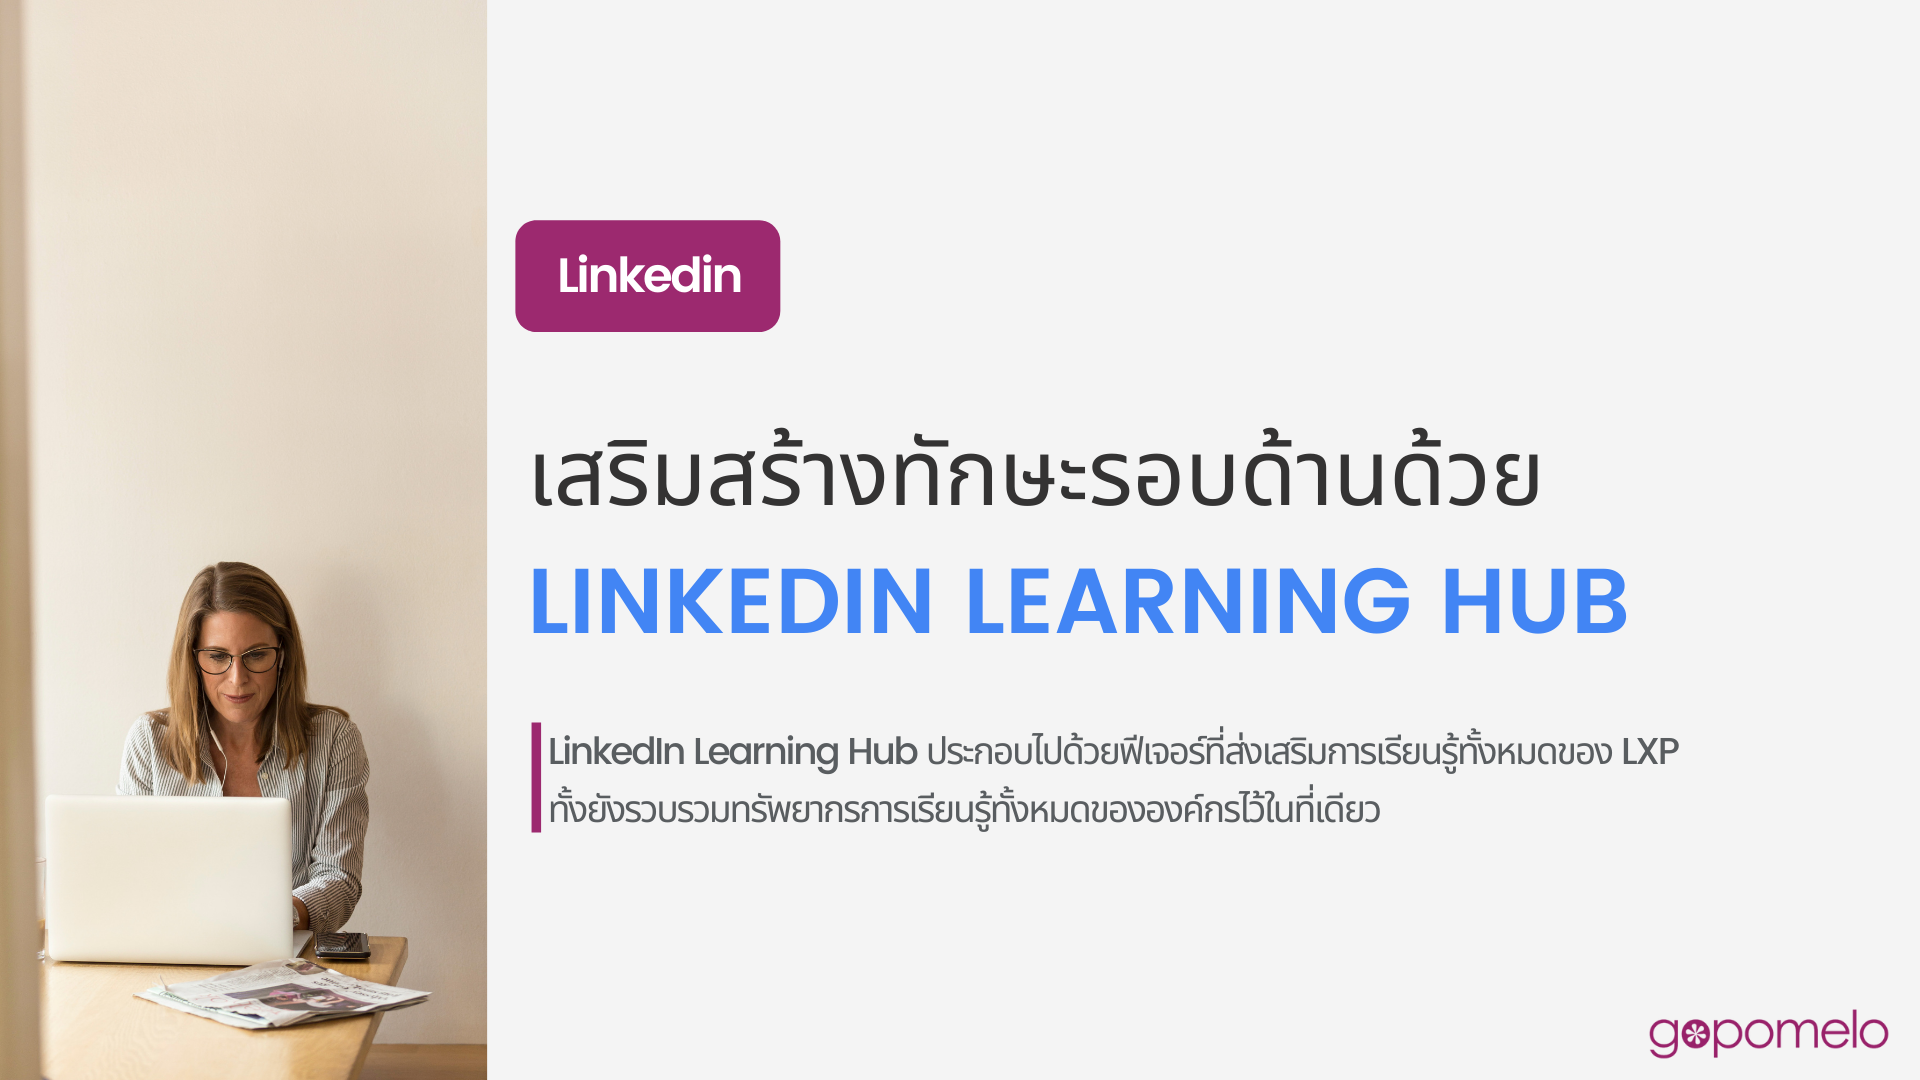 LinkedIn: เสริมสร้างทักษะรอบด้านด้วย LinkedIn Learning Hub